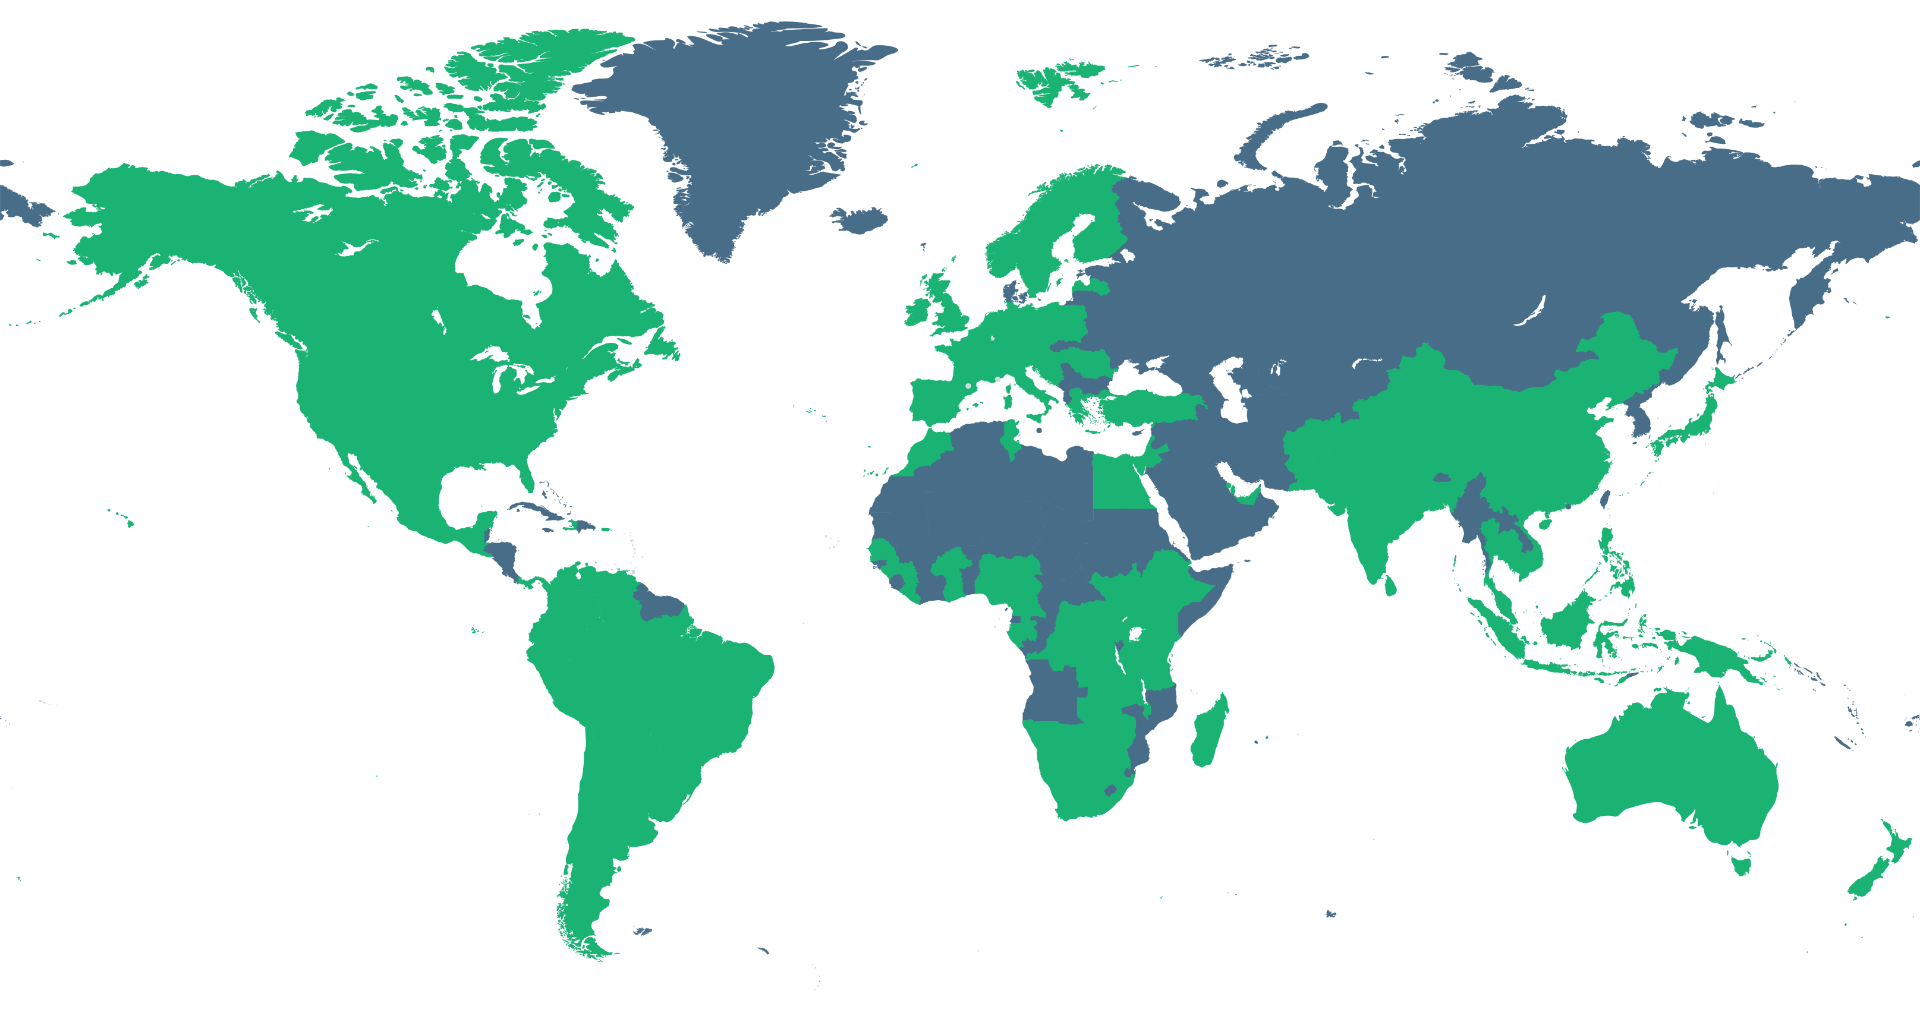 Catalyst 2030 member countries